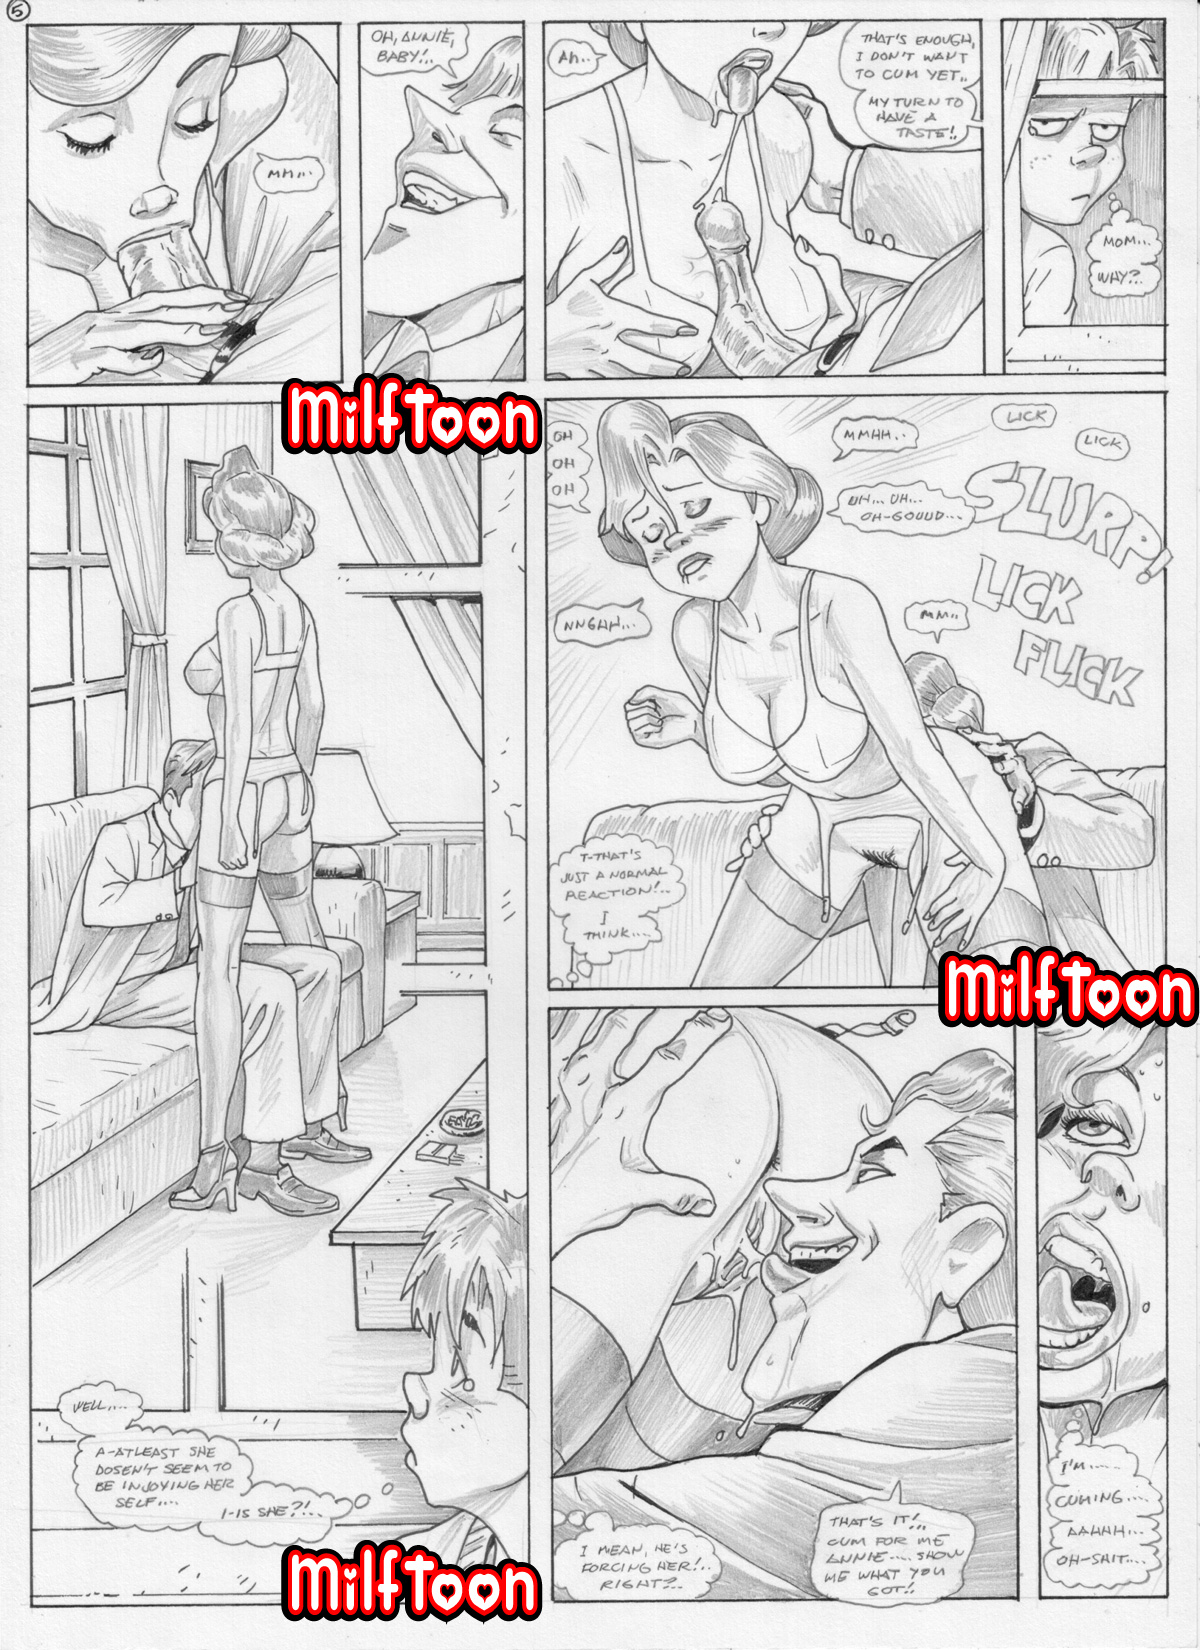 Milftoon - Iron Giant 2 Porn Comics.